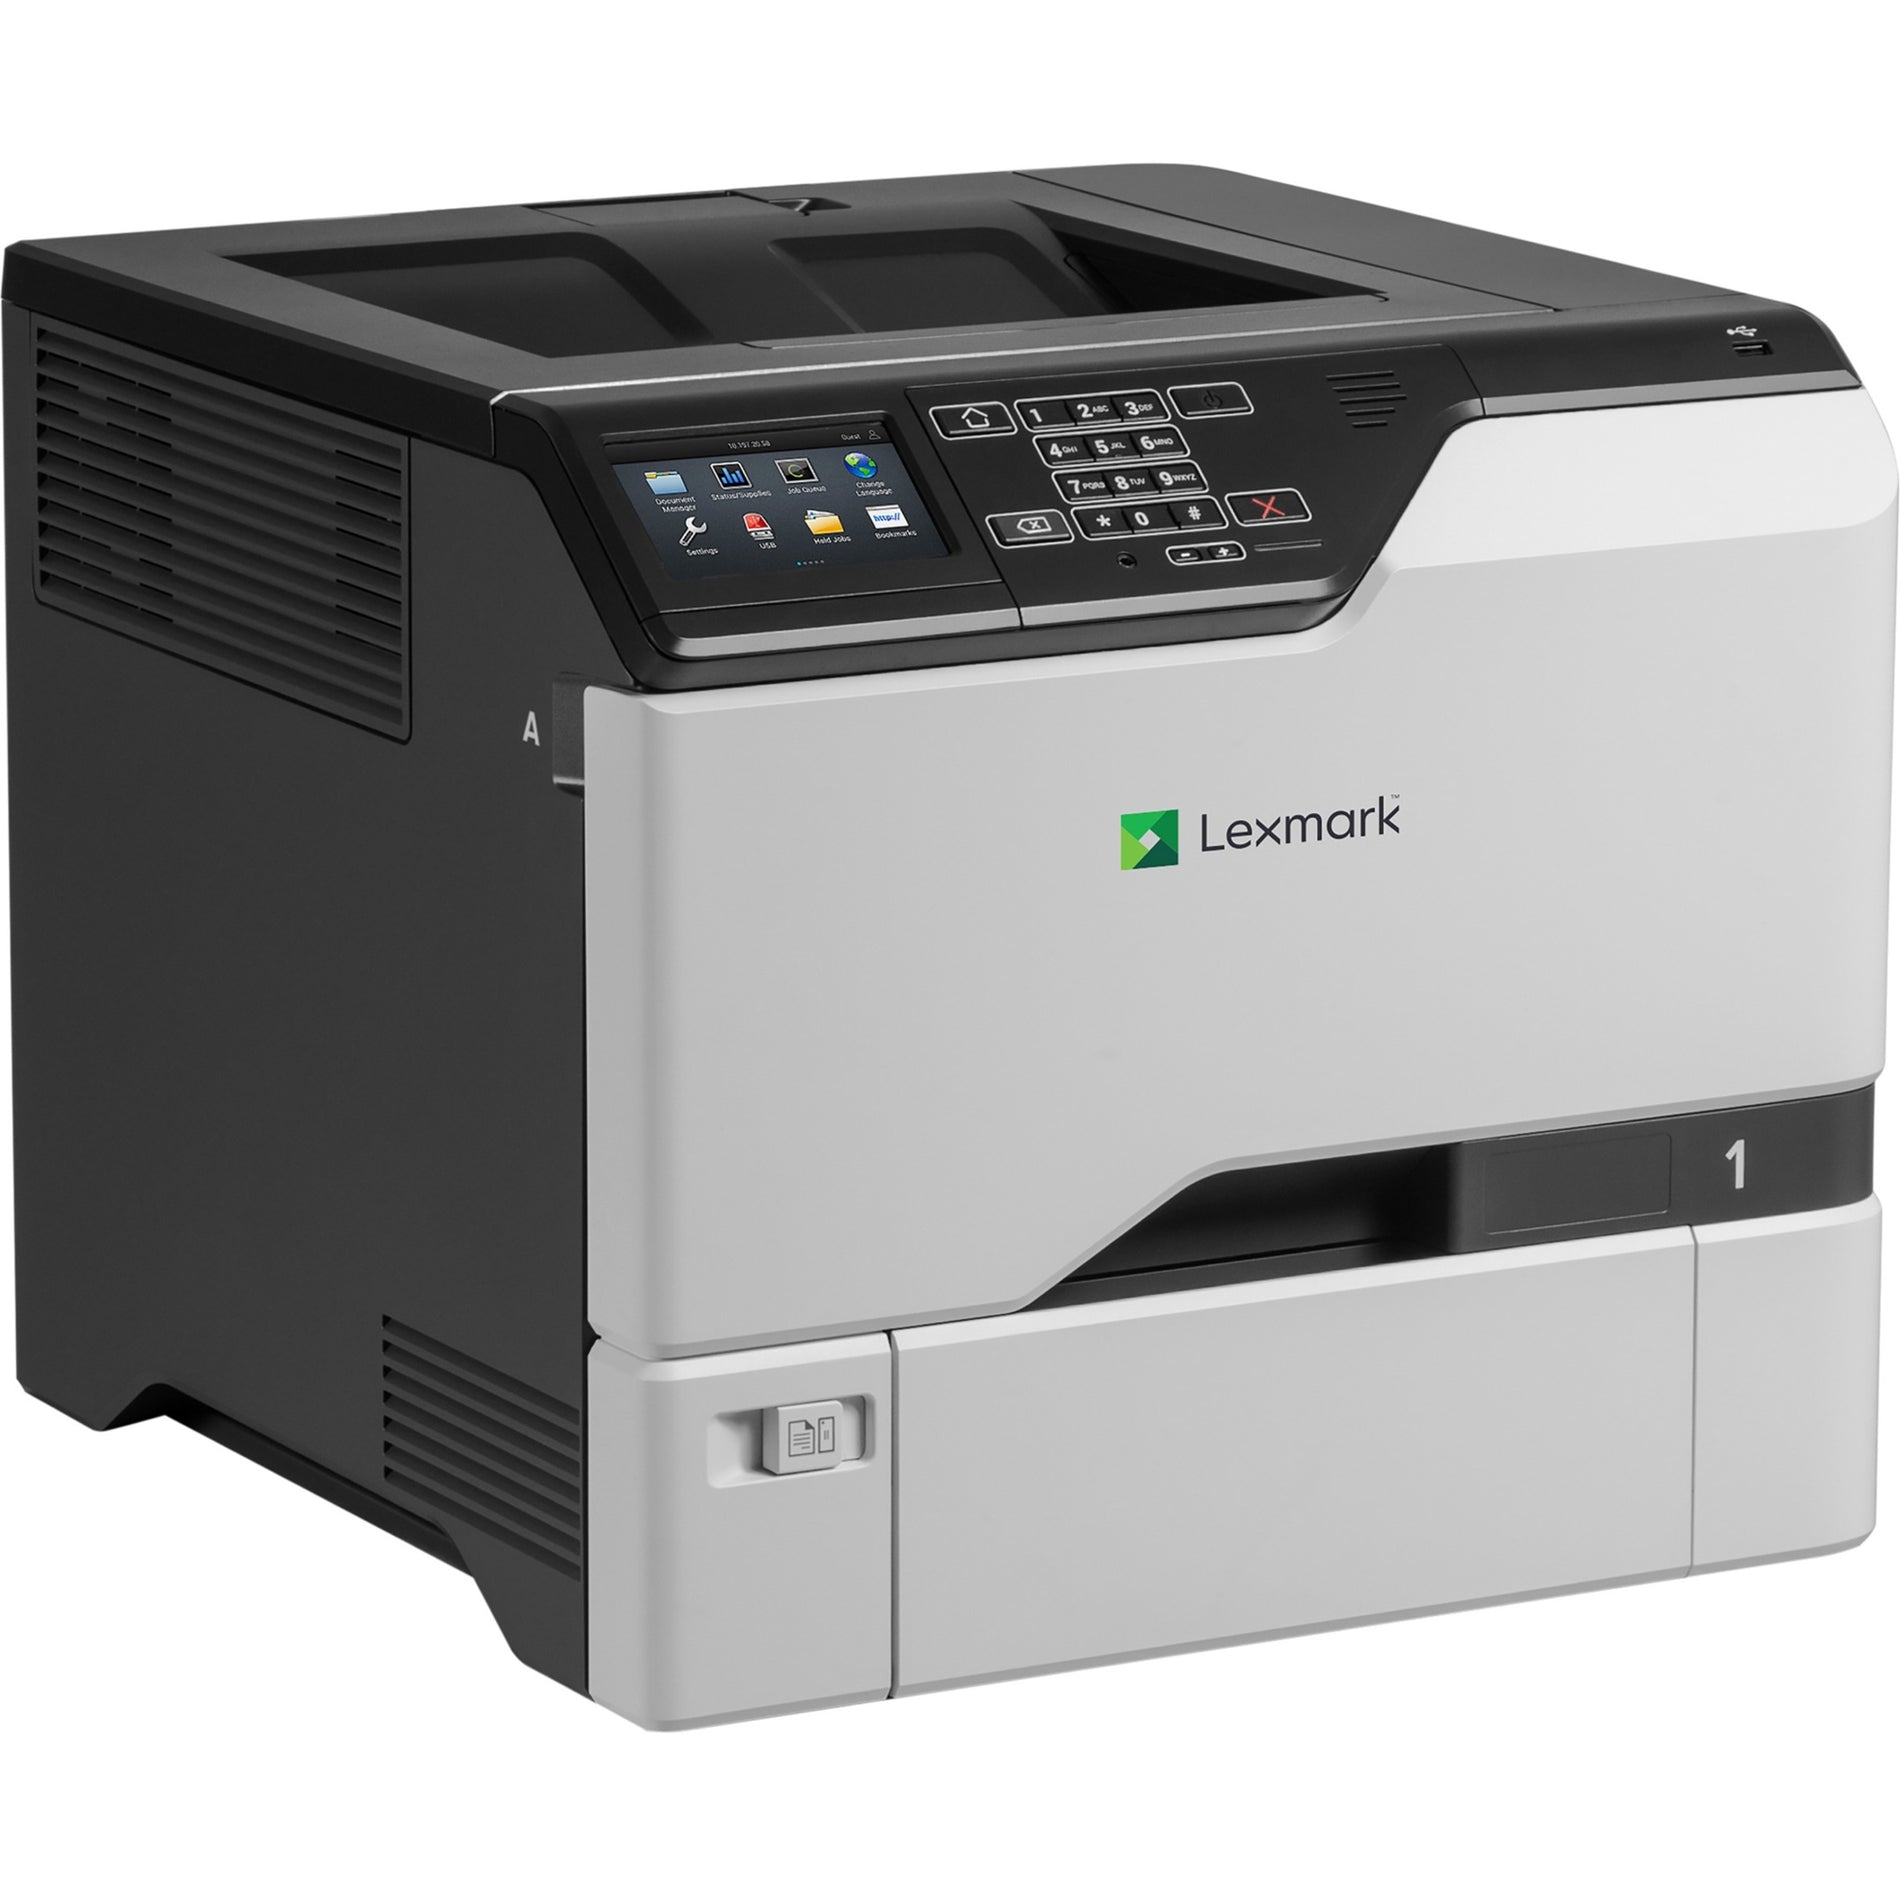 Lexmark 40CT118 CS720de Color Laser Printer, Government Compliant